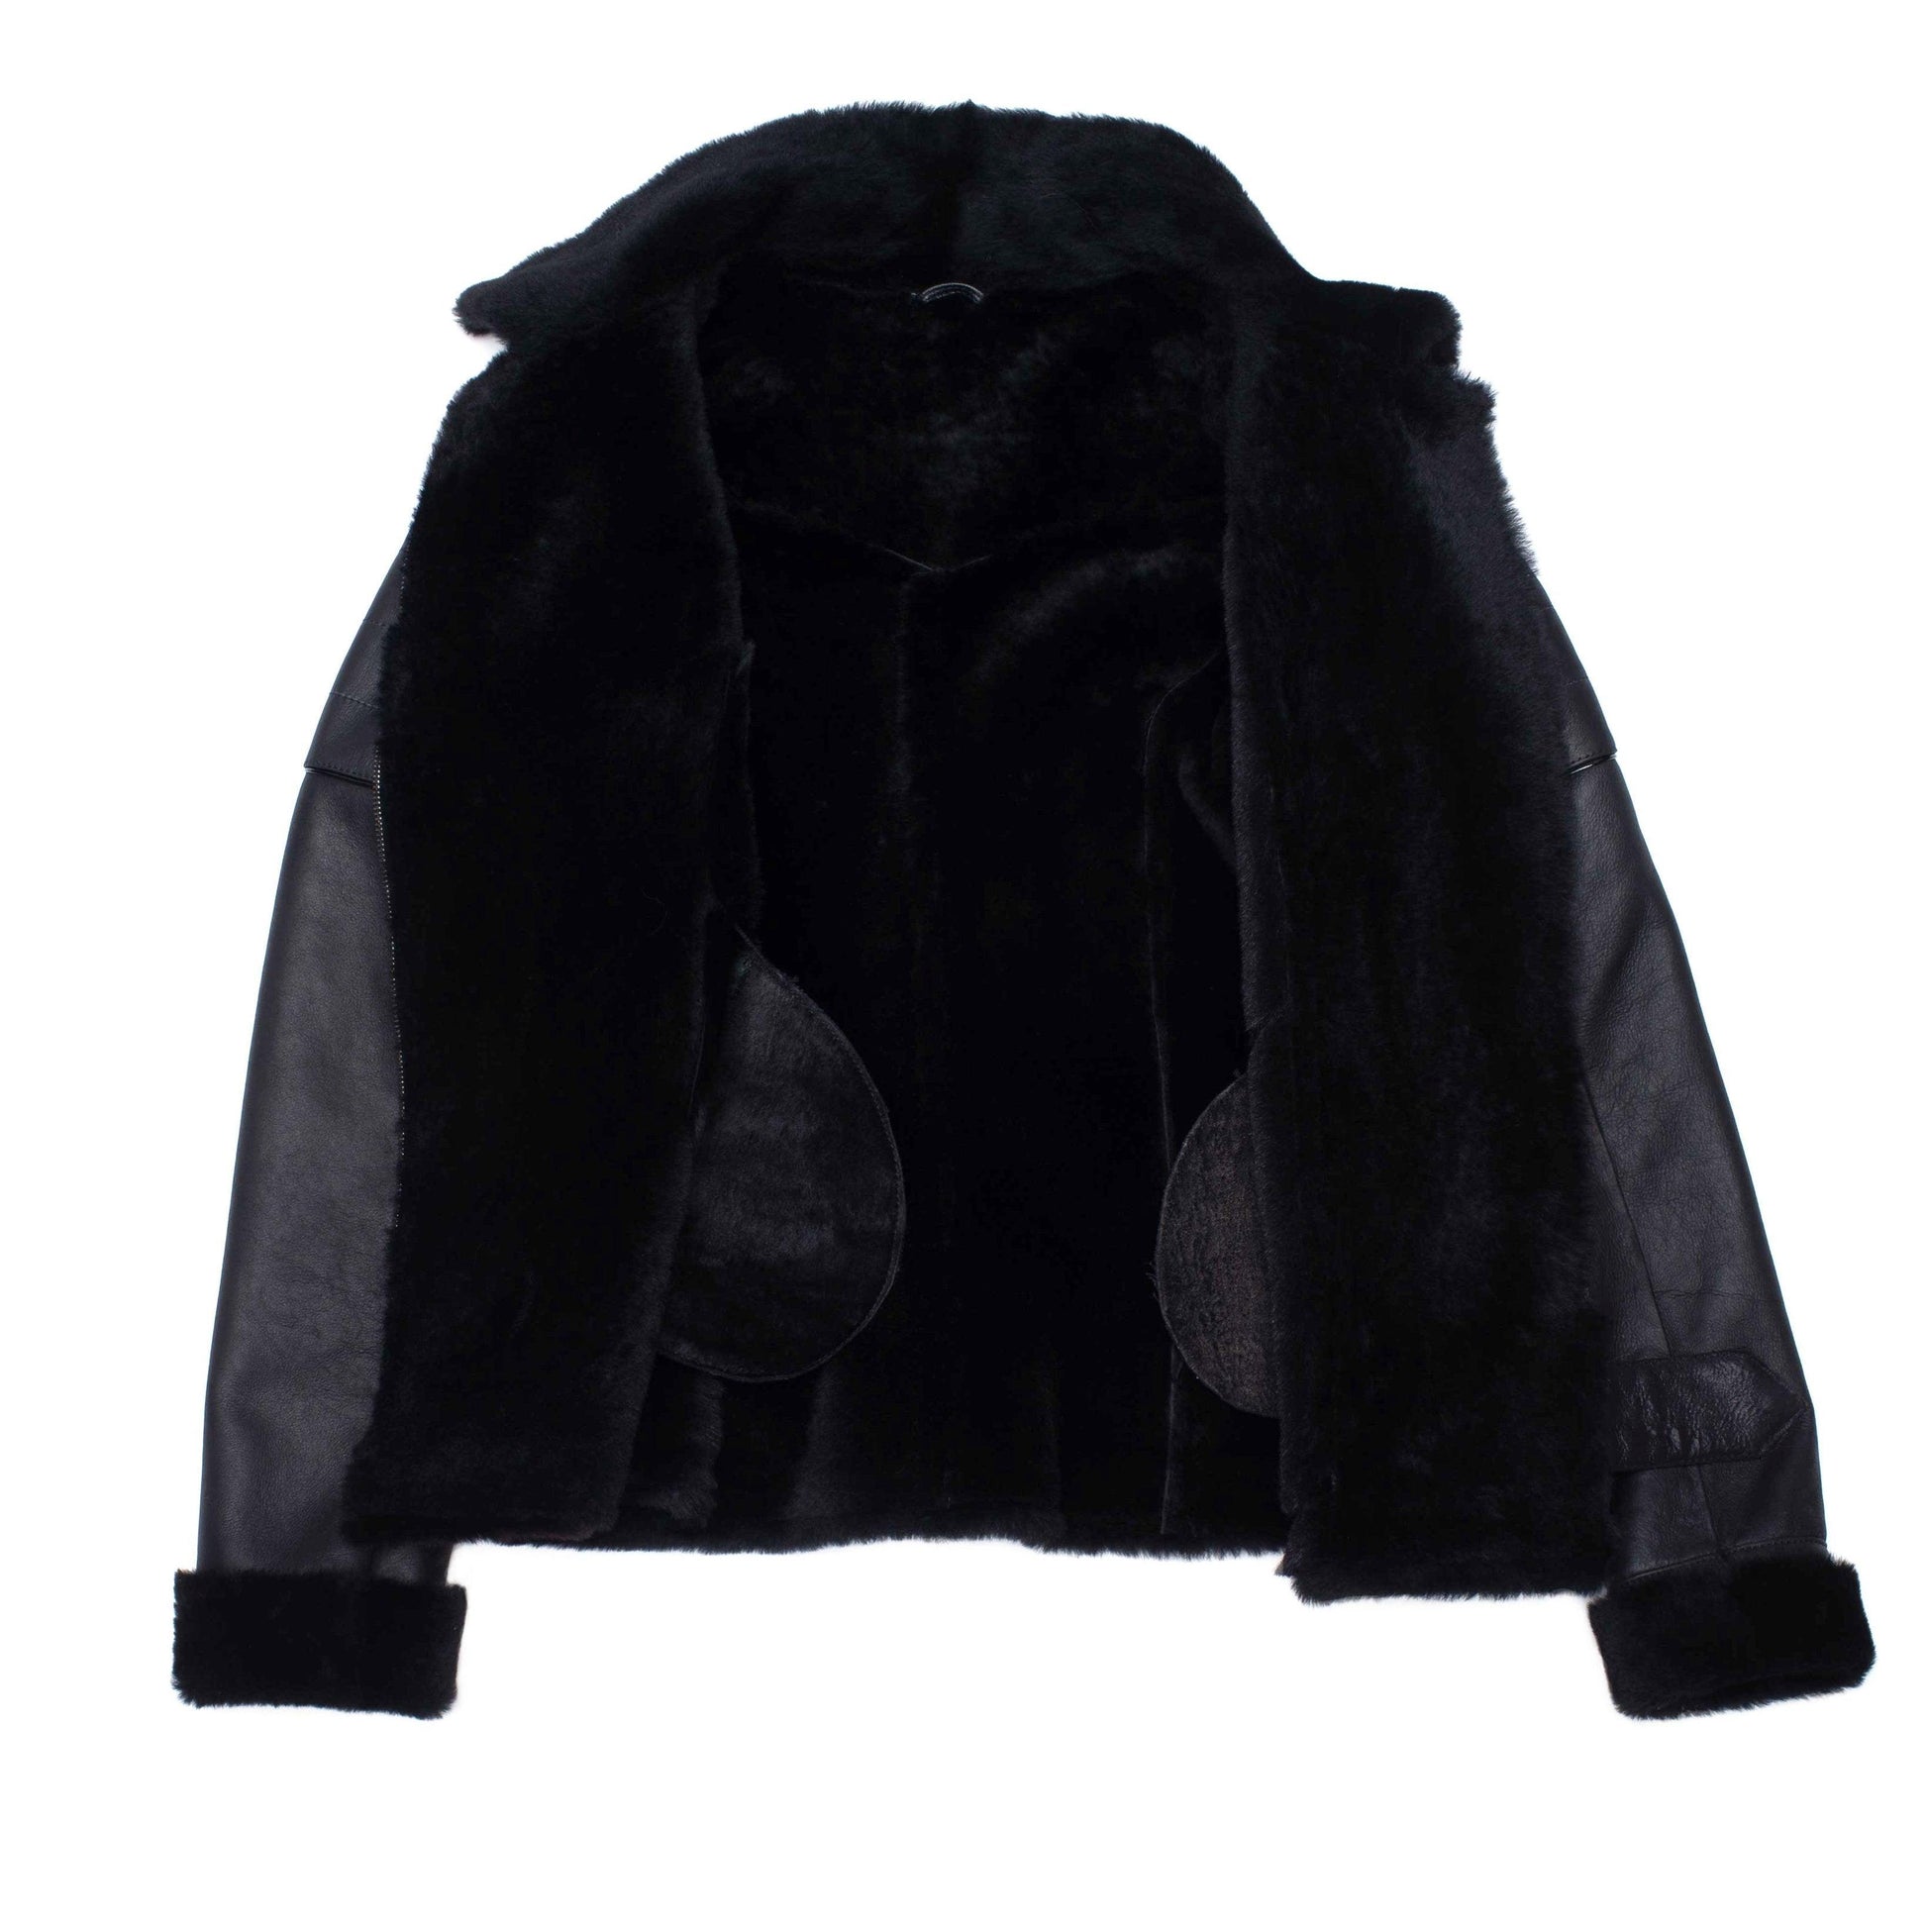 Tasha's B-3 Bomber Black Sheepskin Shearling Style Jacket For Women - Leather Loom